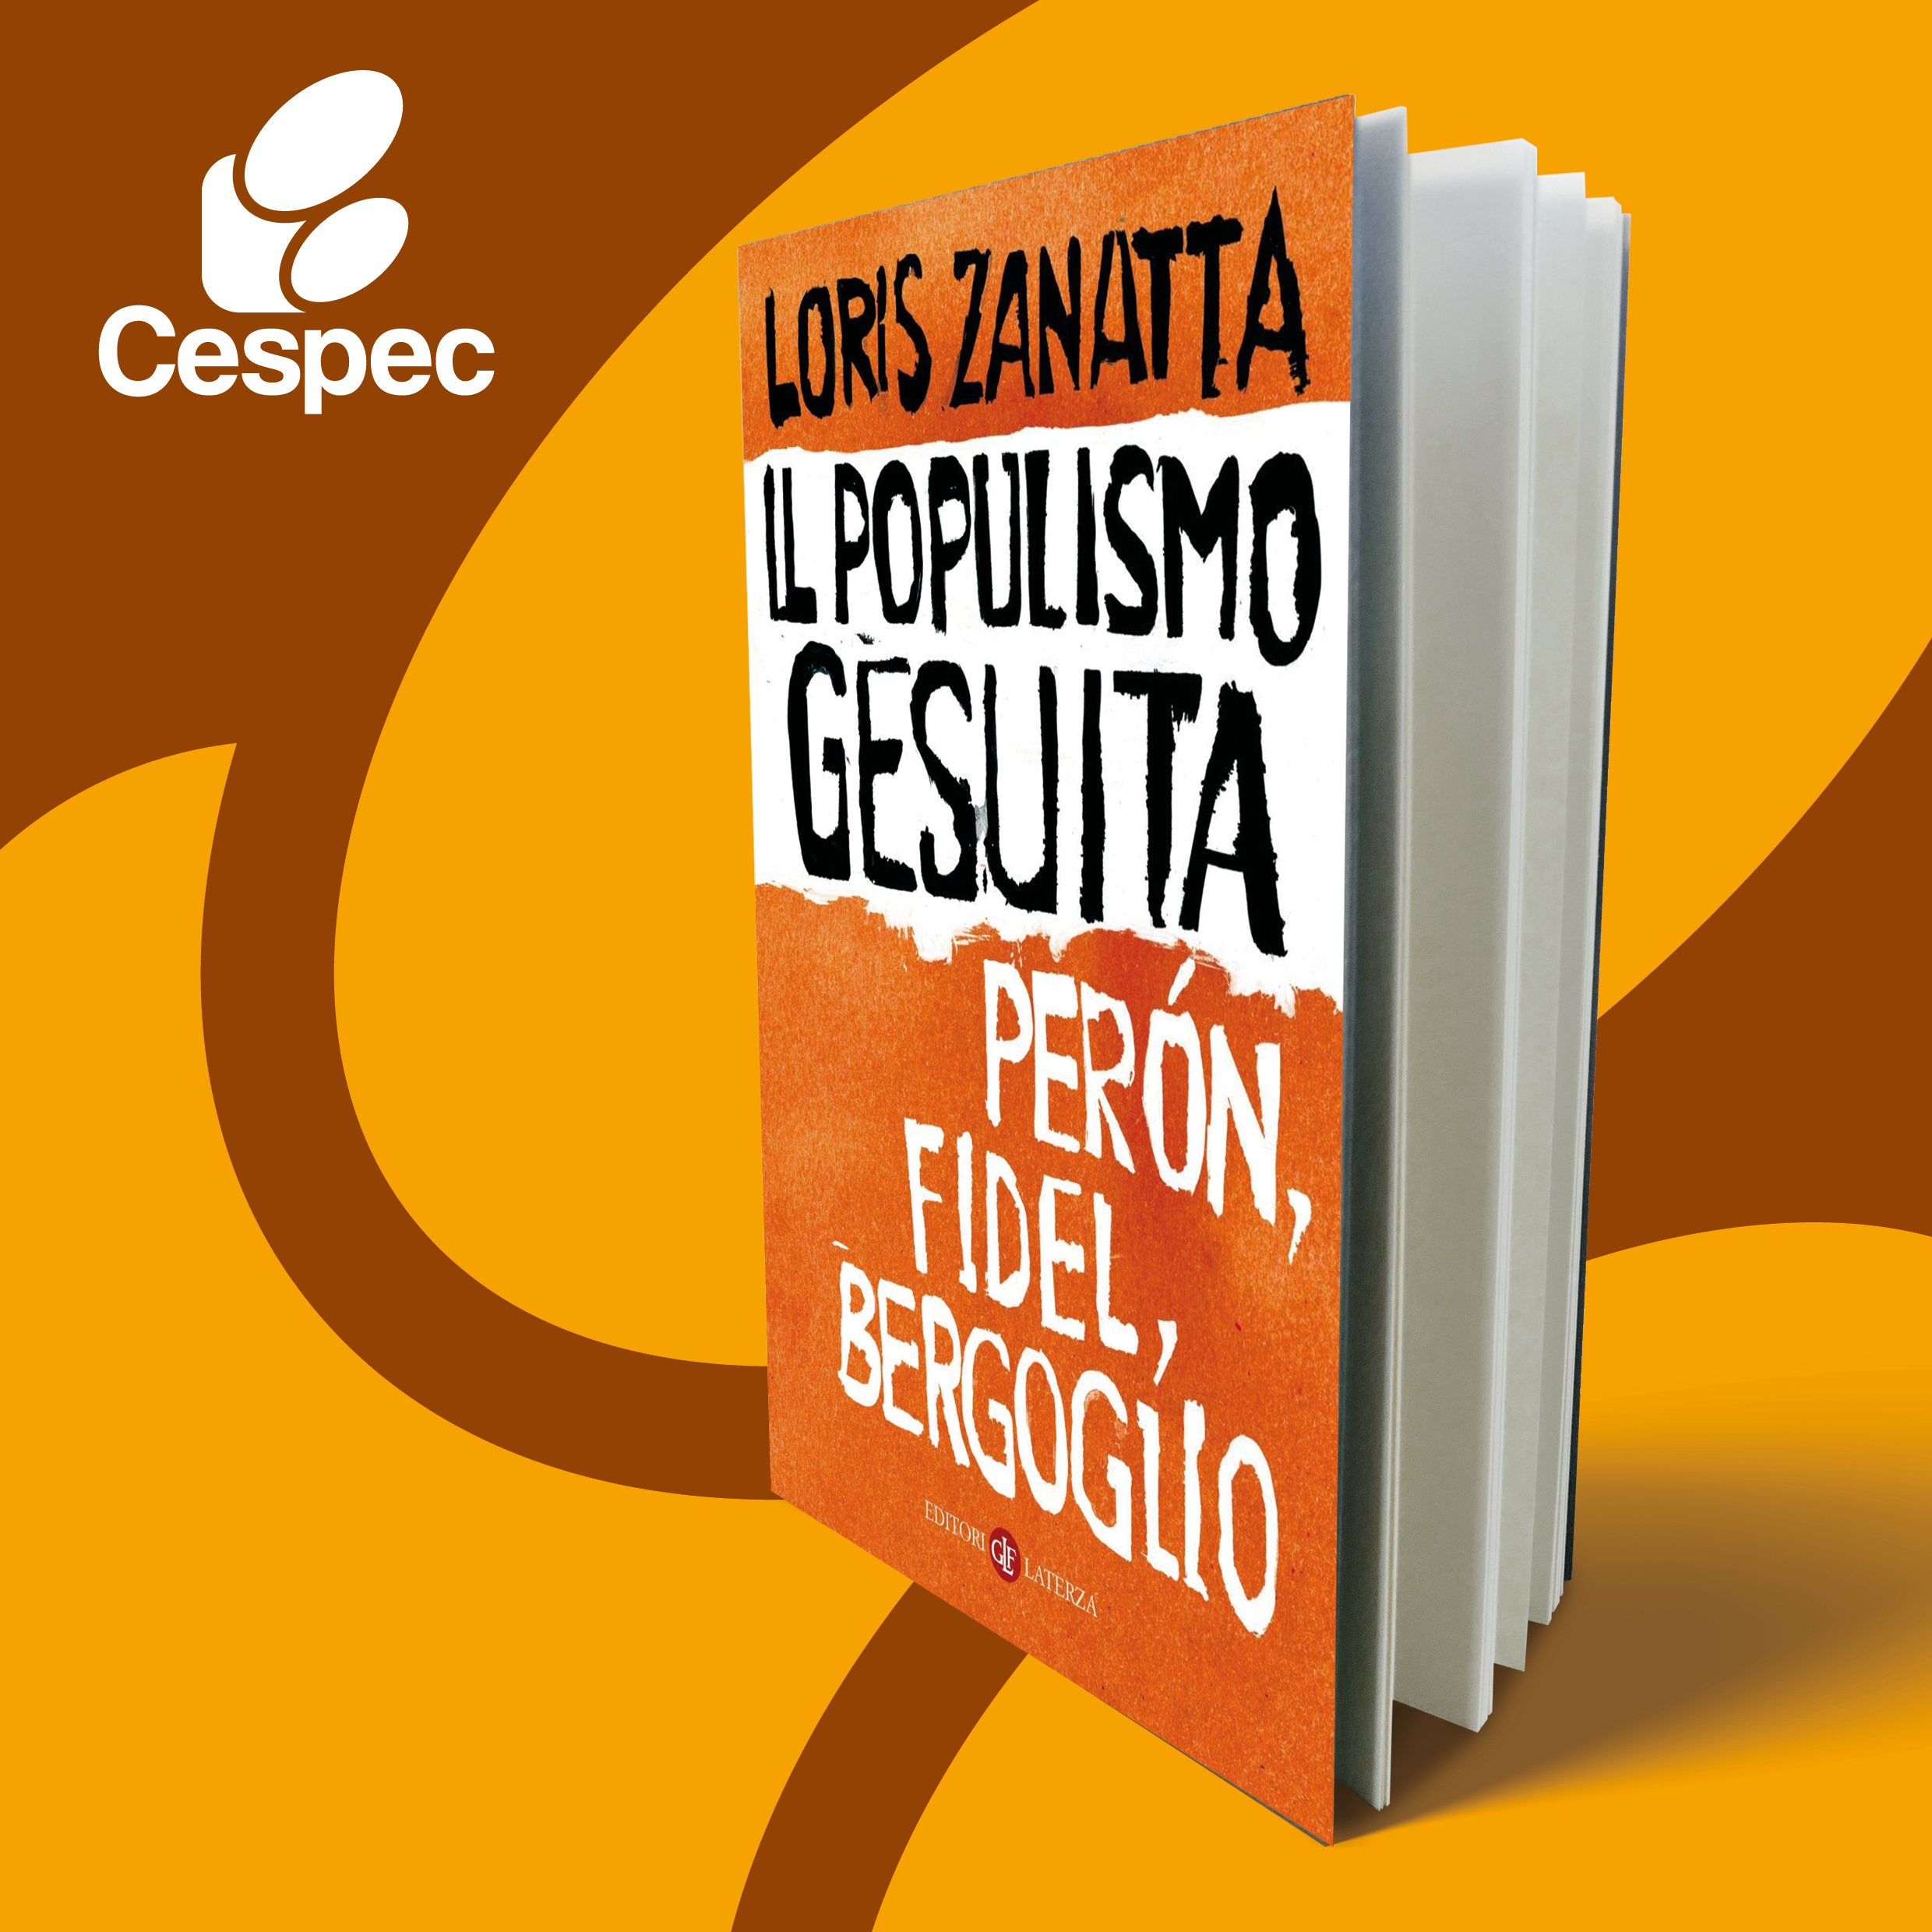 Loris Zanatta, "Il populismo gesuita"